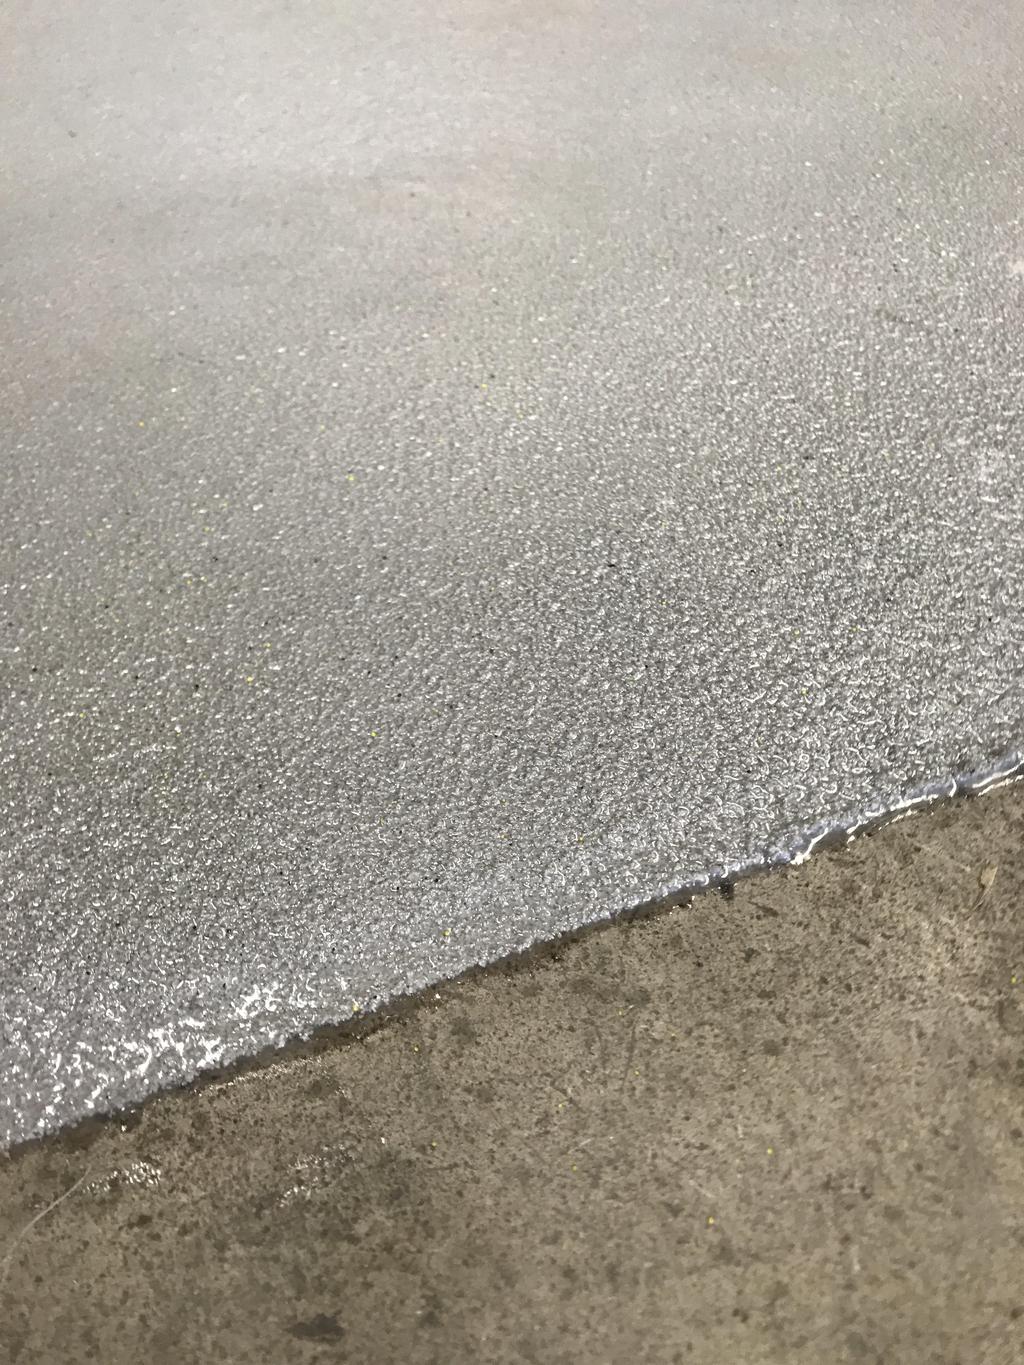 Image Below - Close-up Image of 4 layer TGP quartz aggregate floor coating system (Permanent non-slip floor.